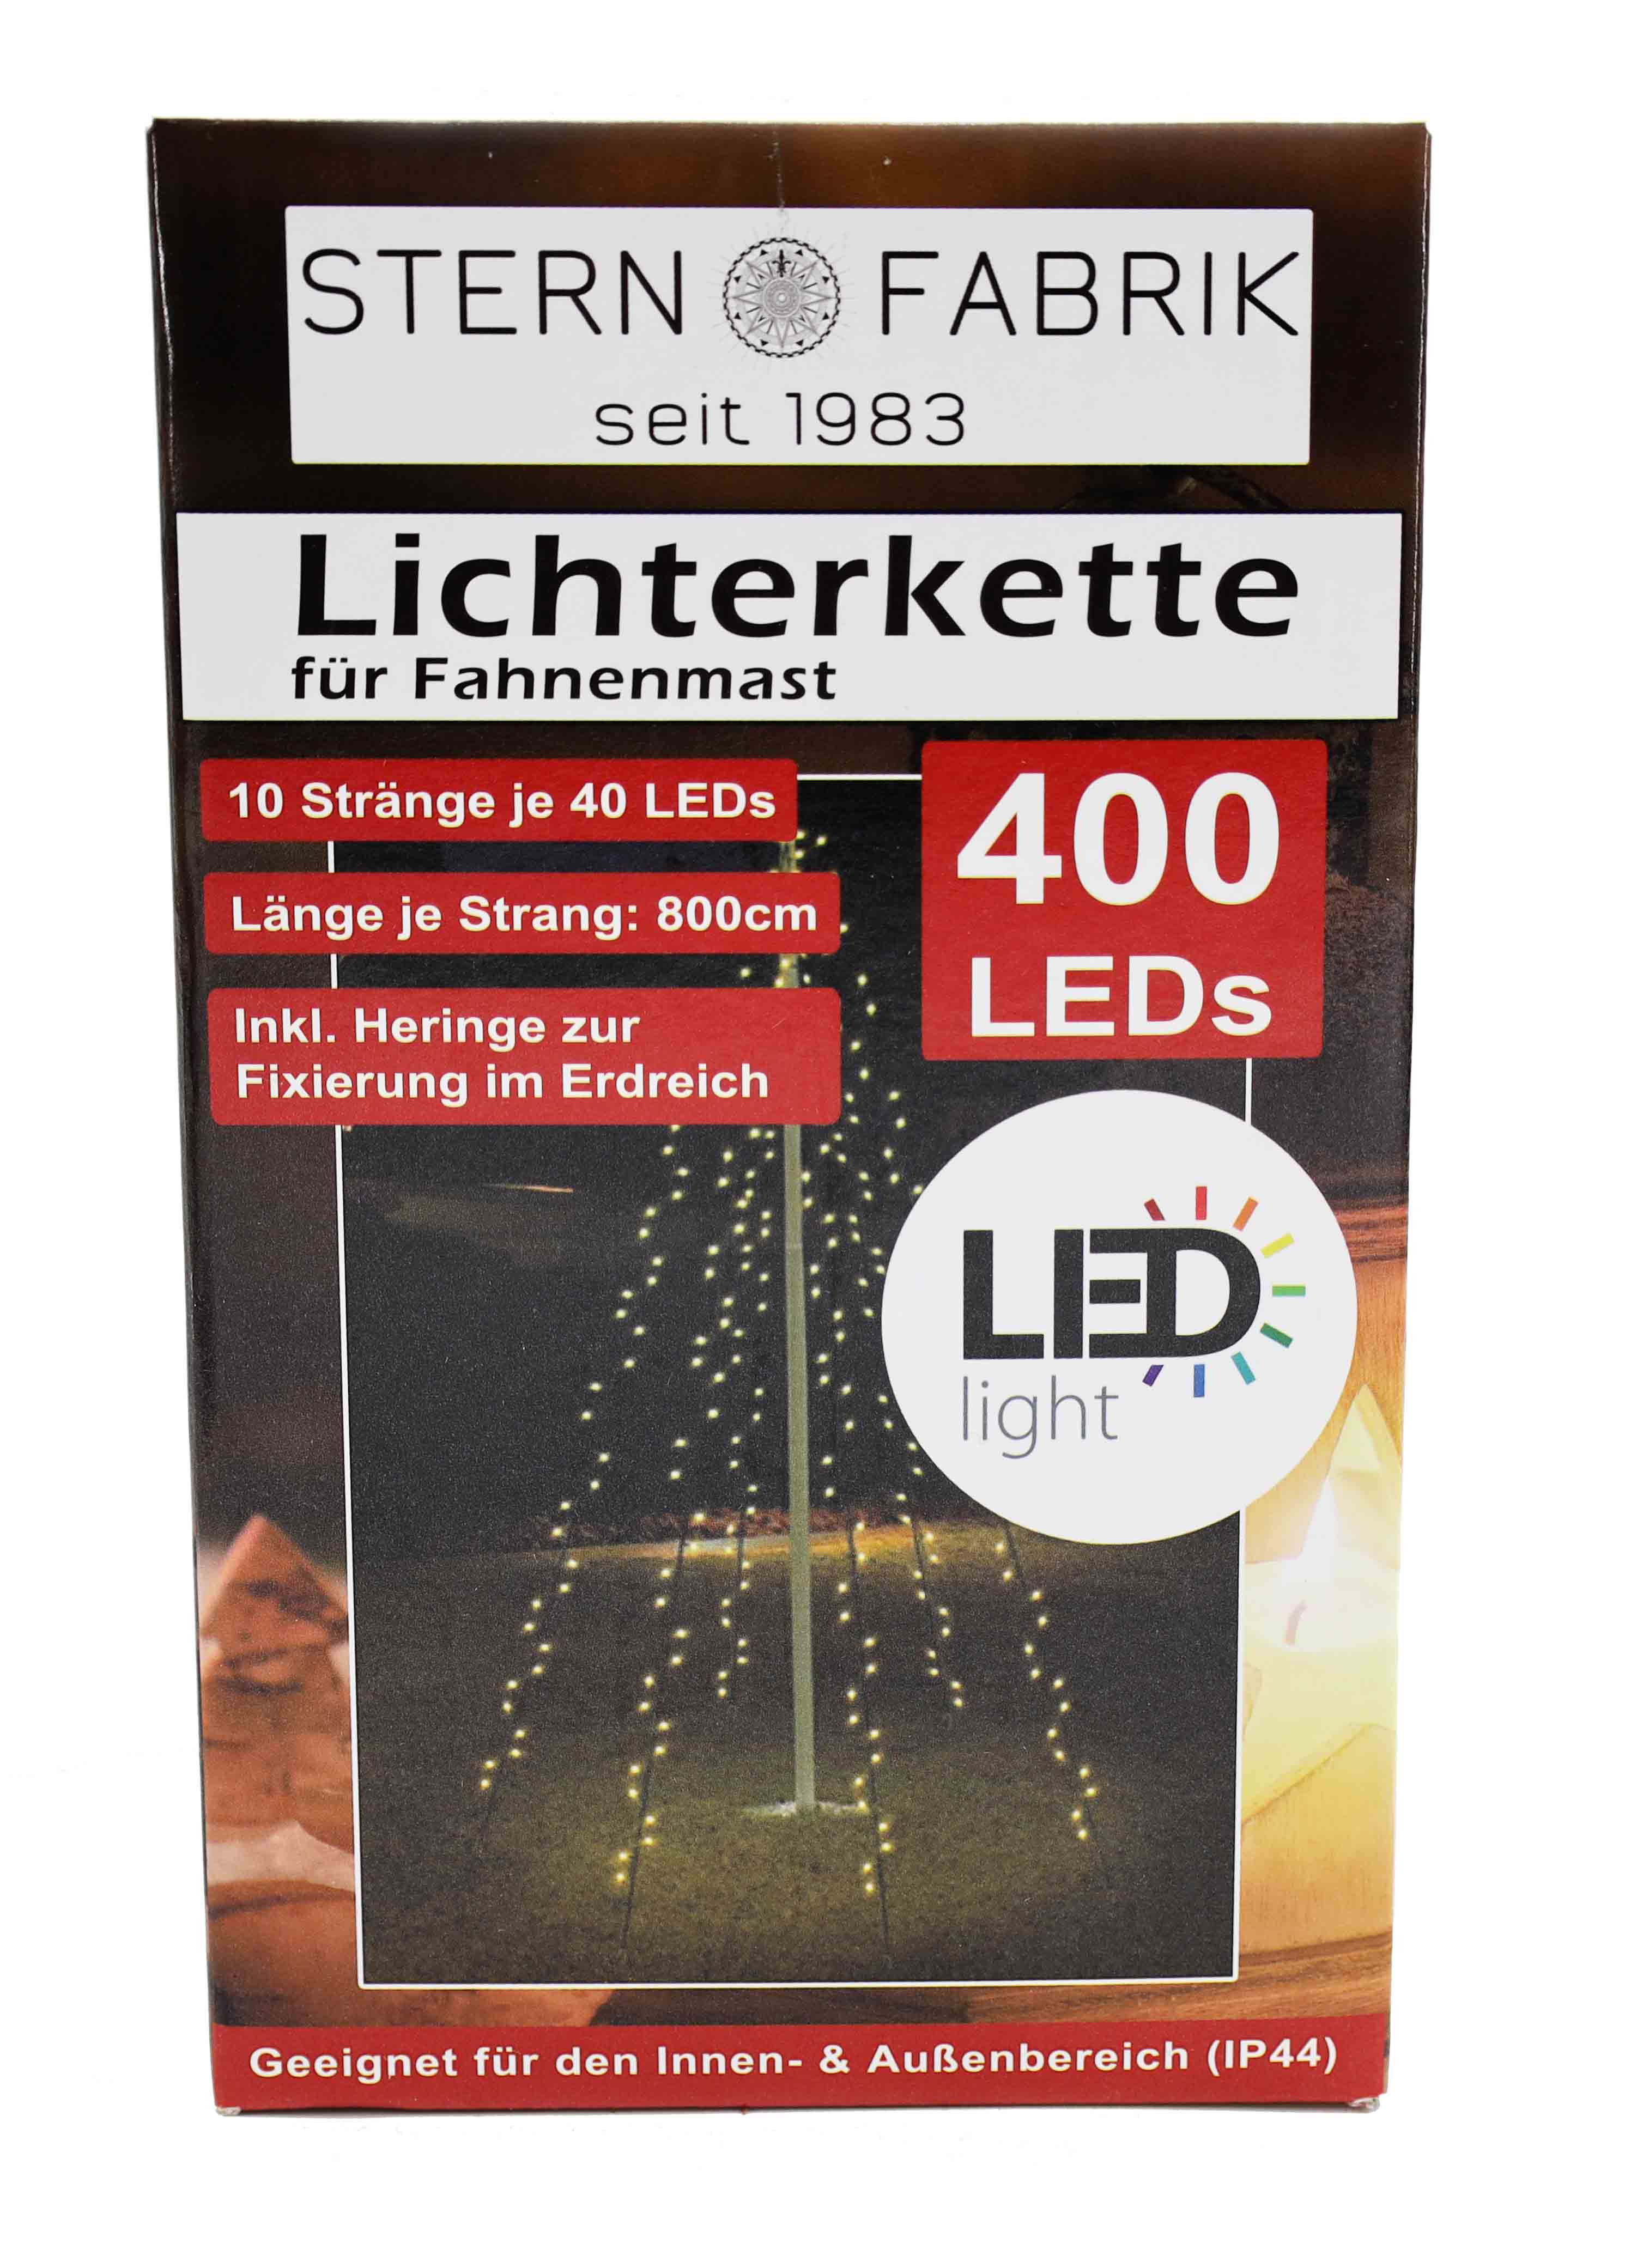 LED Lichterkette für Fahnenmast, 400 LED, 800cm, warmweiß, 10 Heringe, 230V